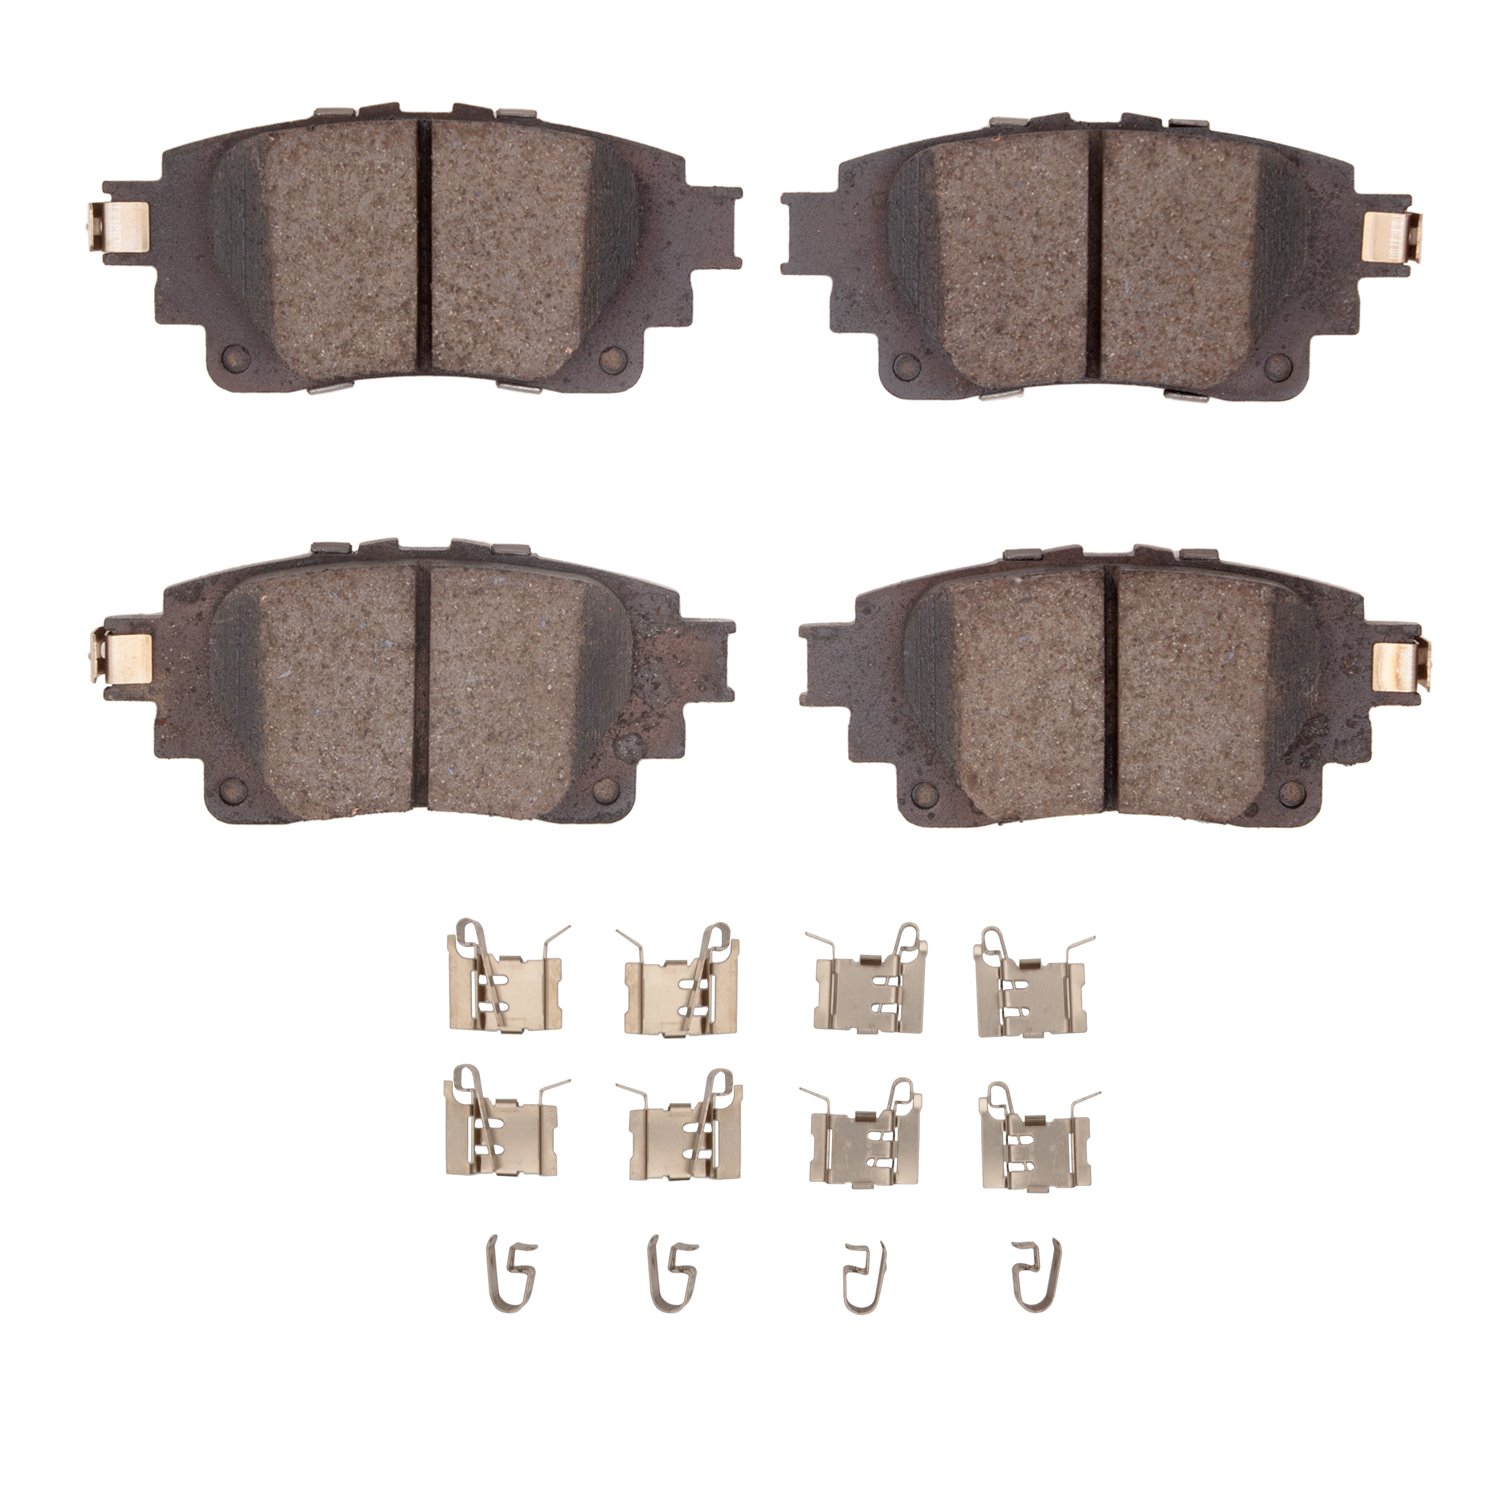 1310-2183-01 3000-Series Ceramic Brake Pads & Hardware Kit, Fits Select Lexus/Toyota/Scion, Position: Rear